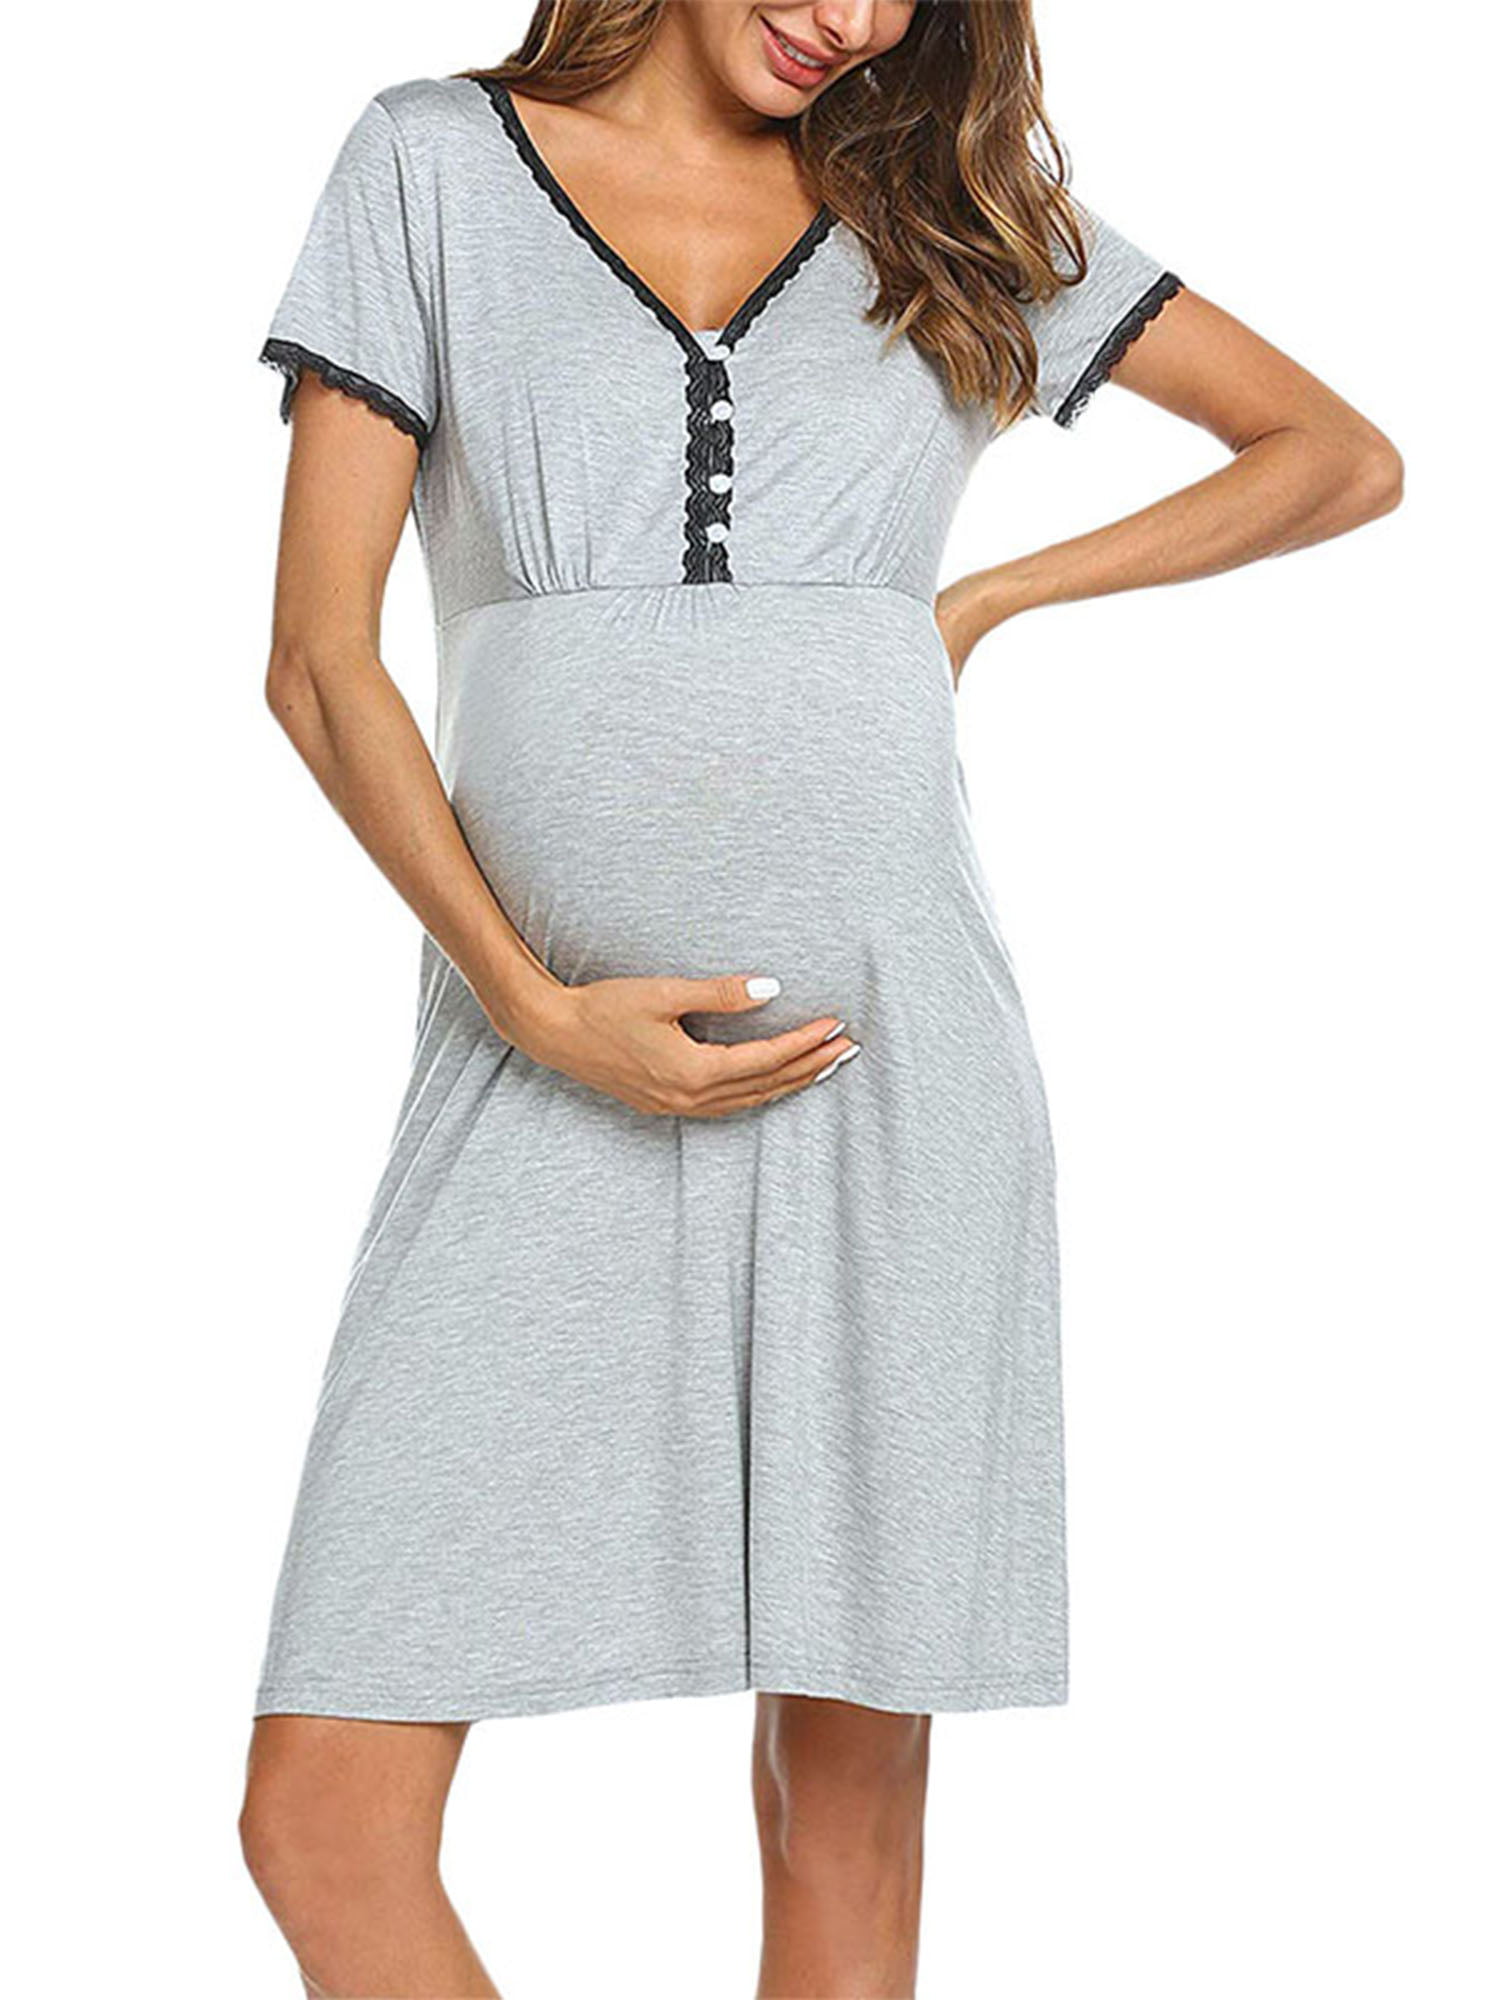 Women Maternity Dress Pregnancy Nightgown Nursing Sleepwear Solid Lace Robe Gown